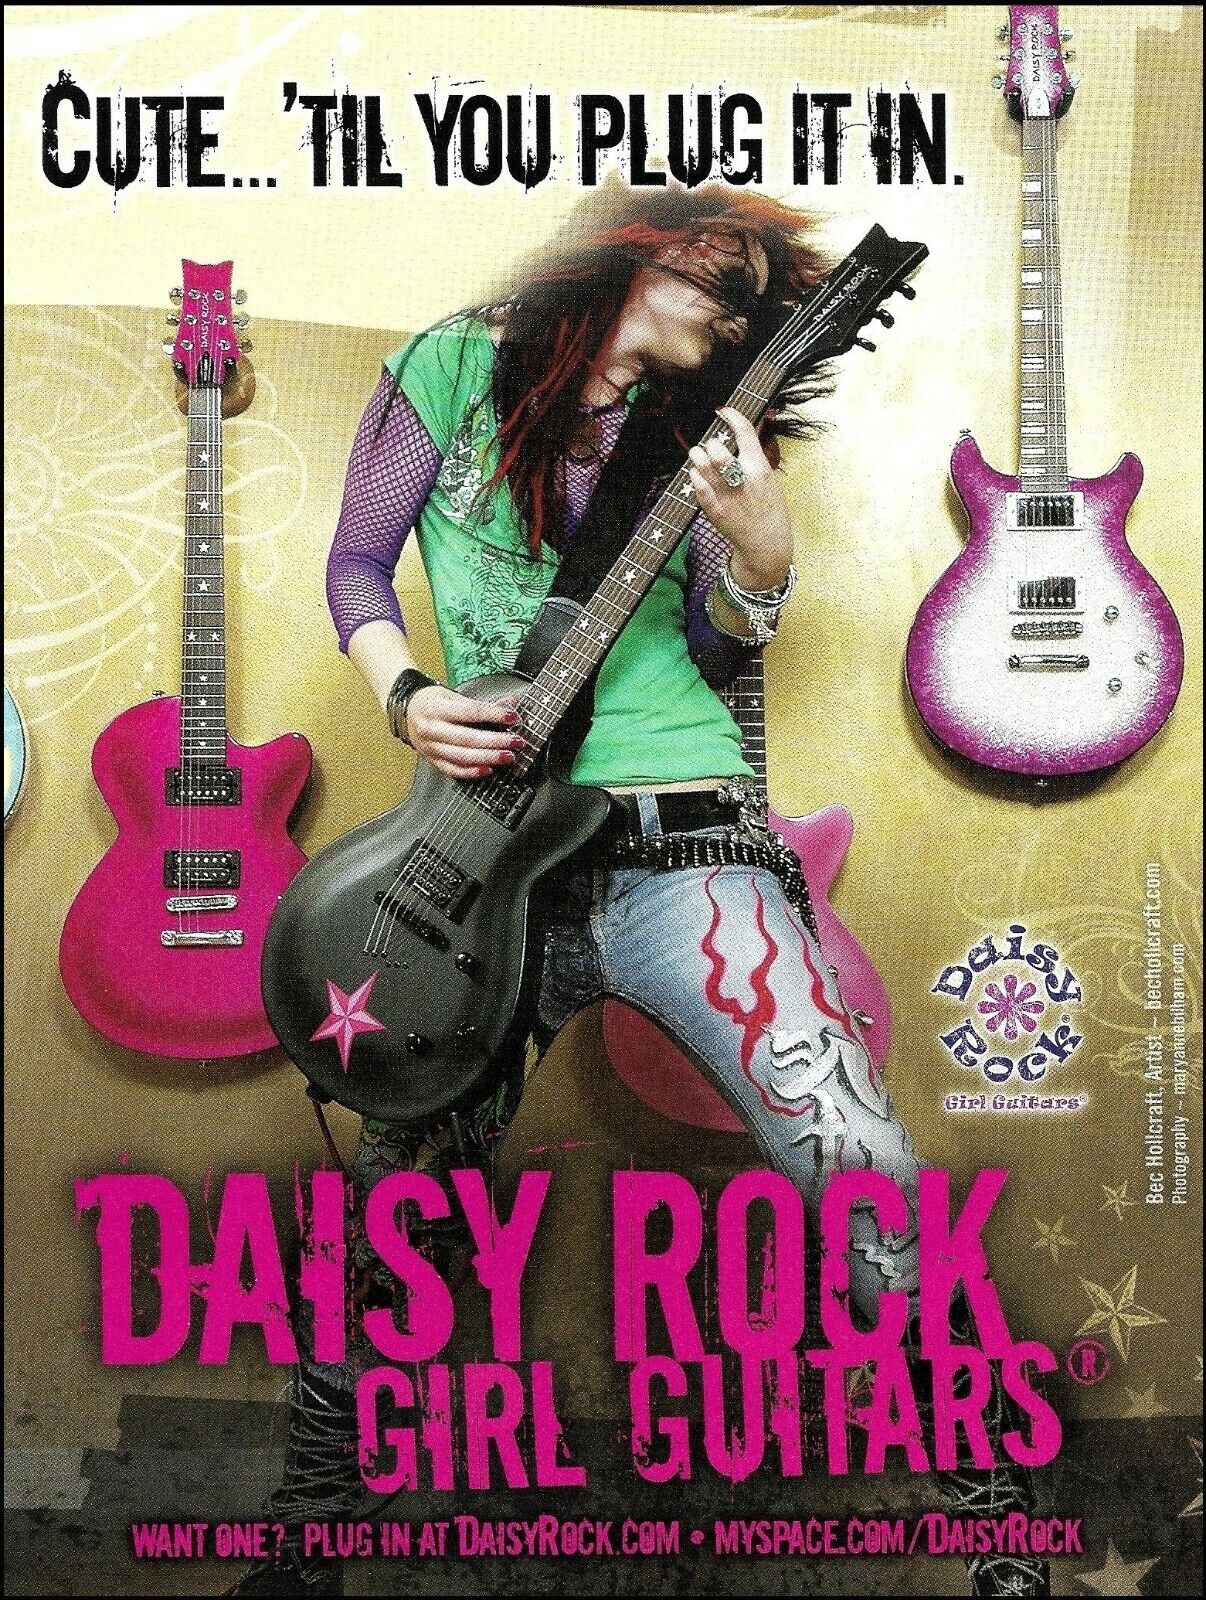  Daisy Rock Girl Guitars 2006 ad 8 x 11 pink black guitar advertisement print